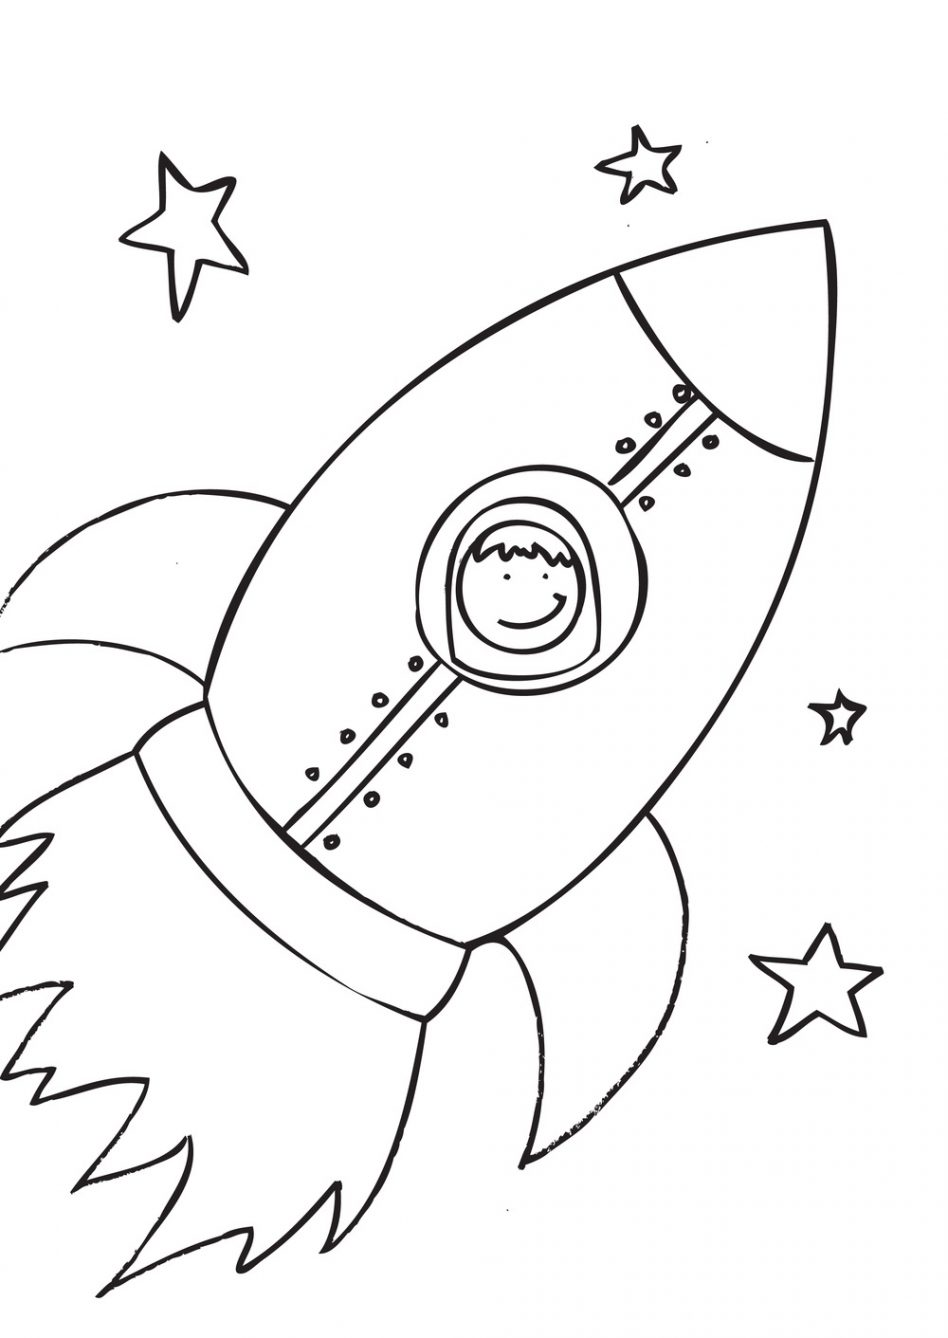 nasa-spaceship-drawing-at-getdrawings-free-download